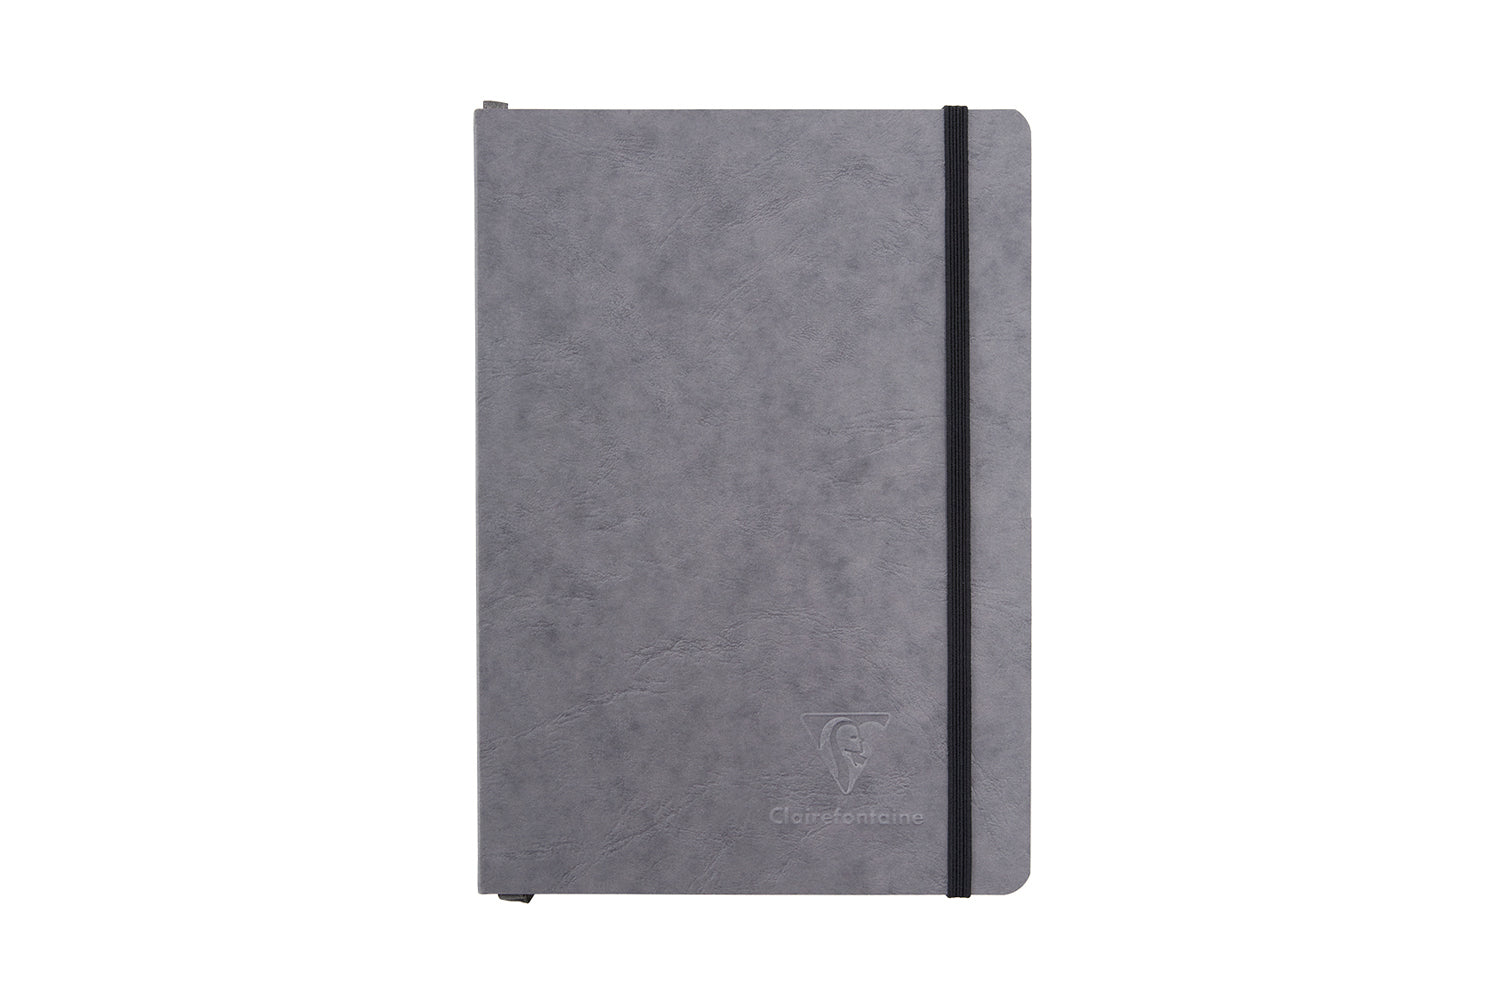 Primary Journal Notebooks - Grey